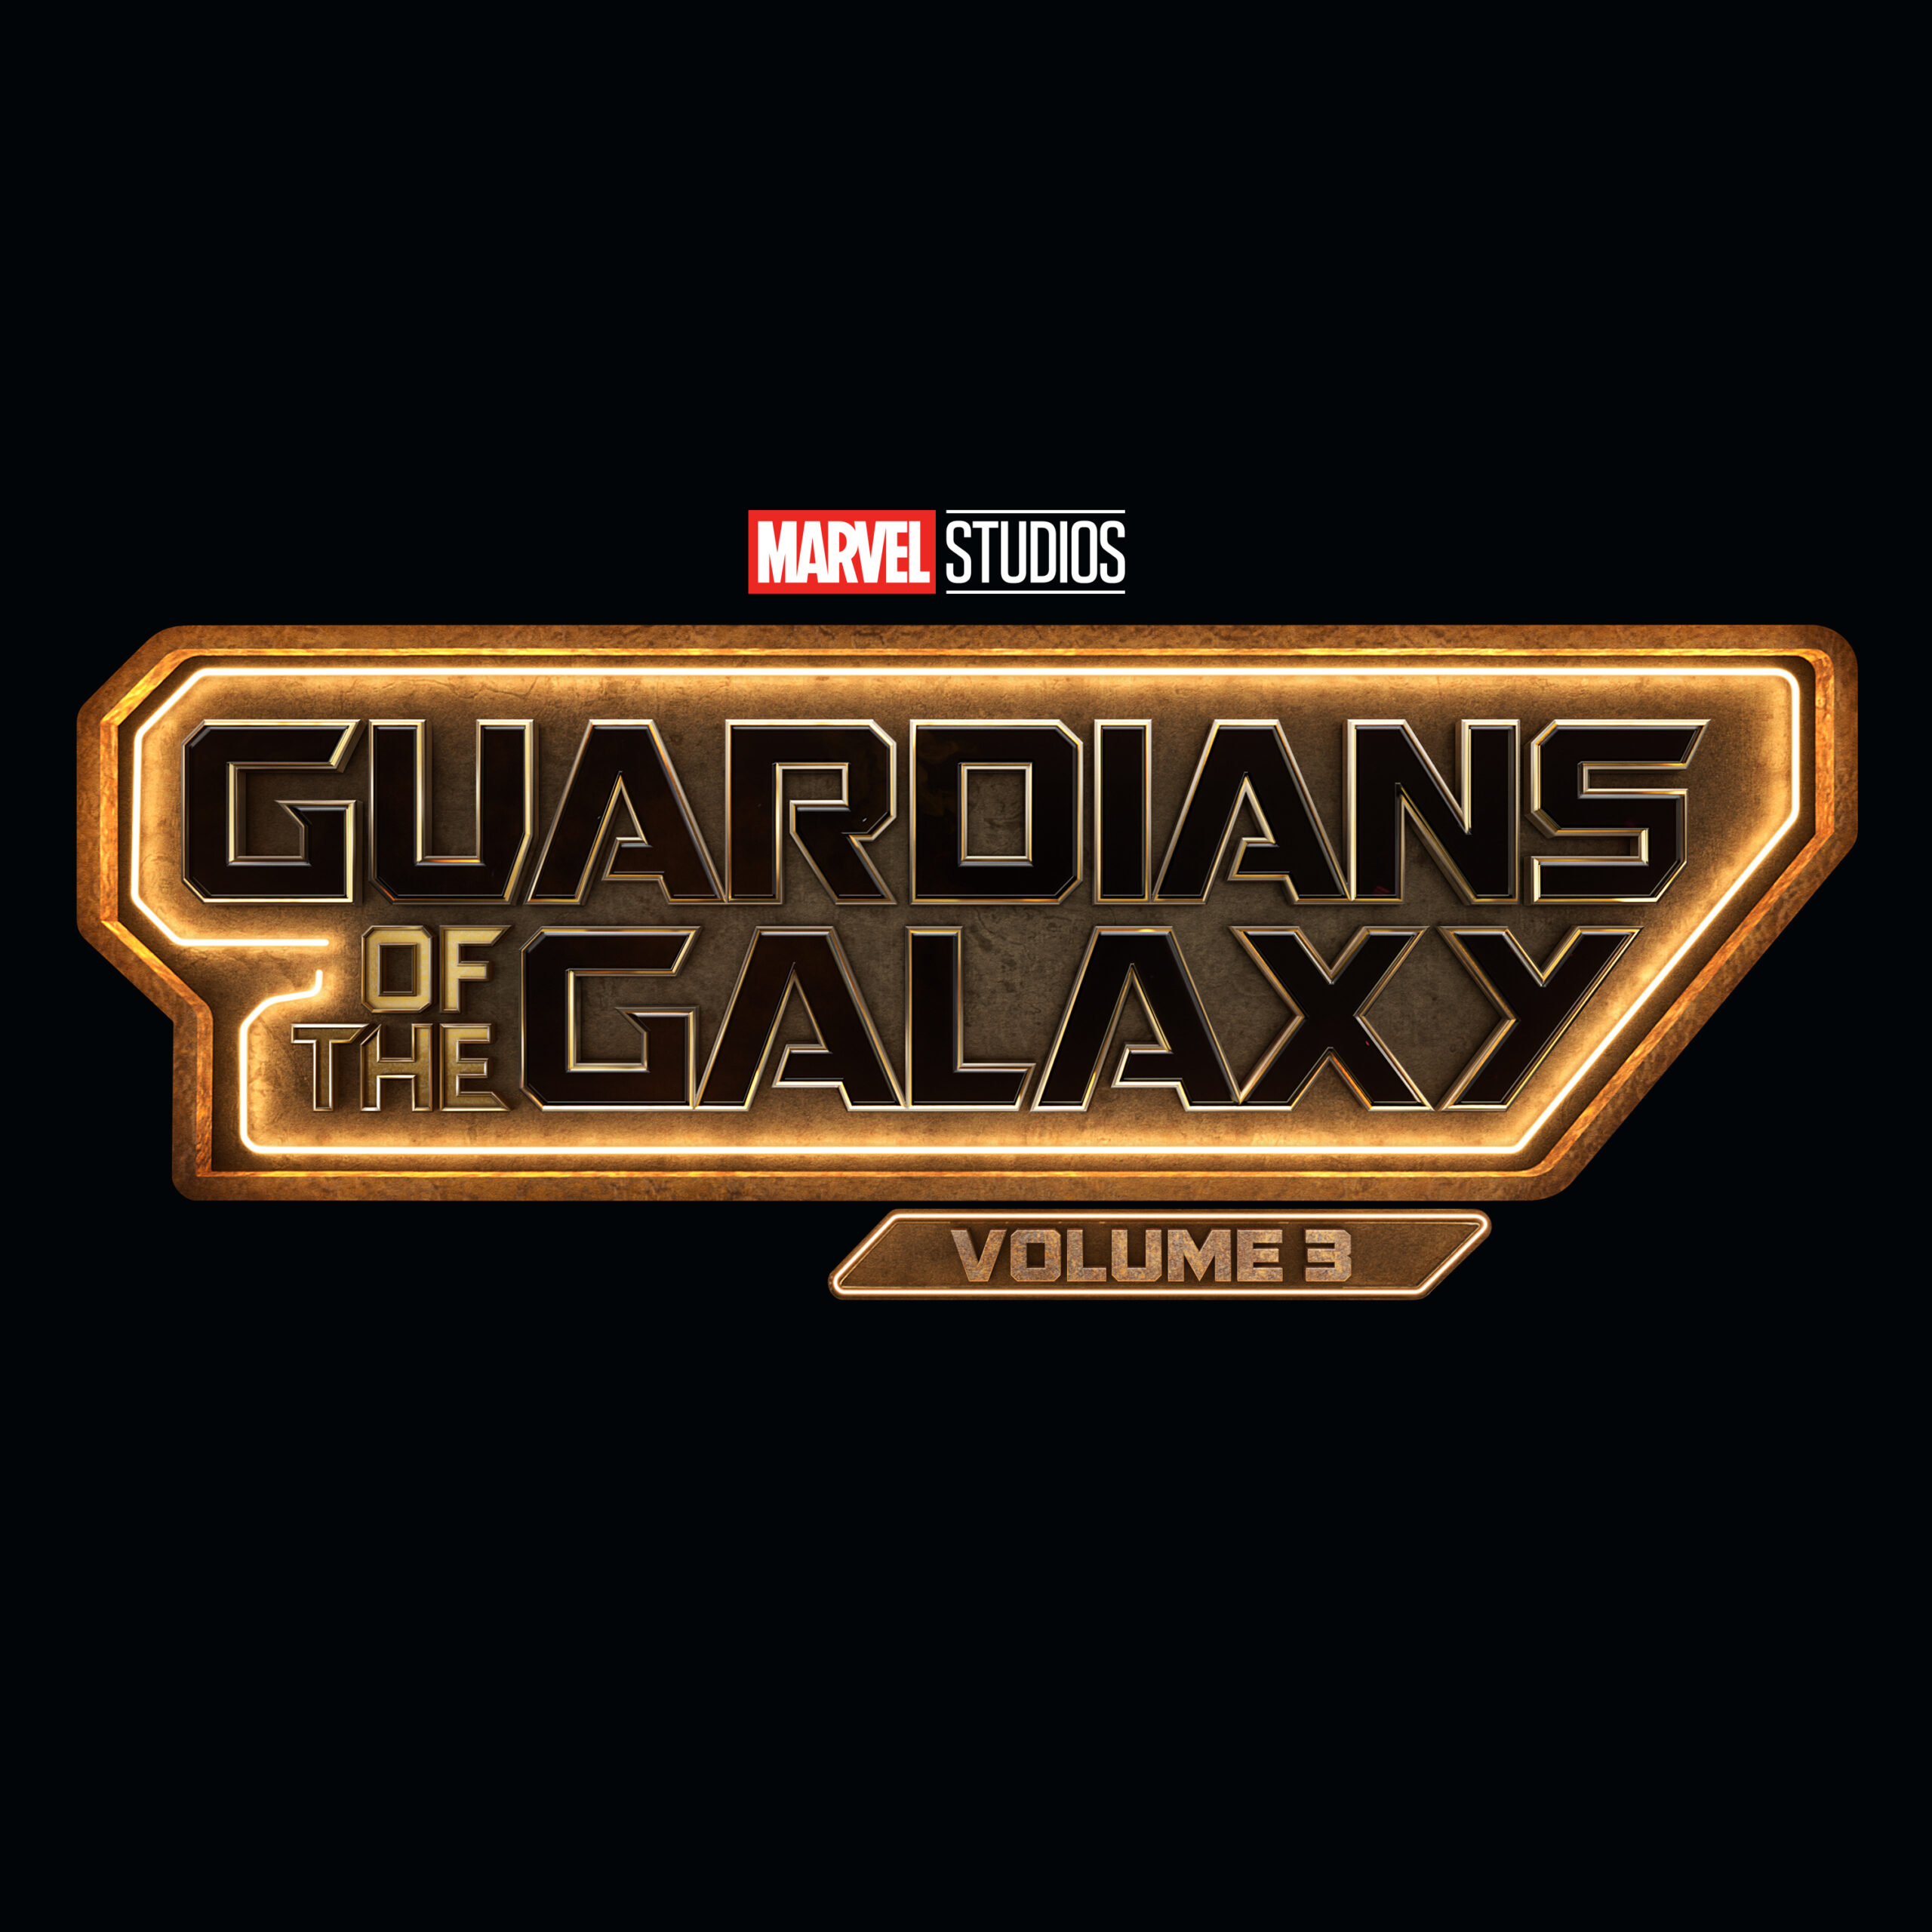 James Gunn Explains Why No Guardians 3 Trailer Online Yet